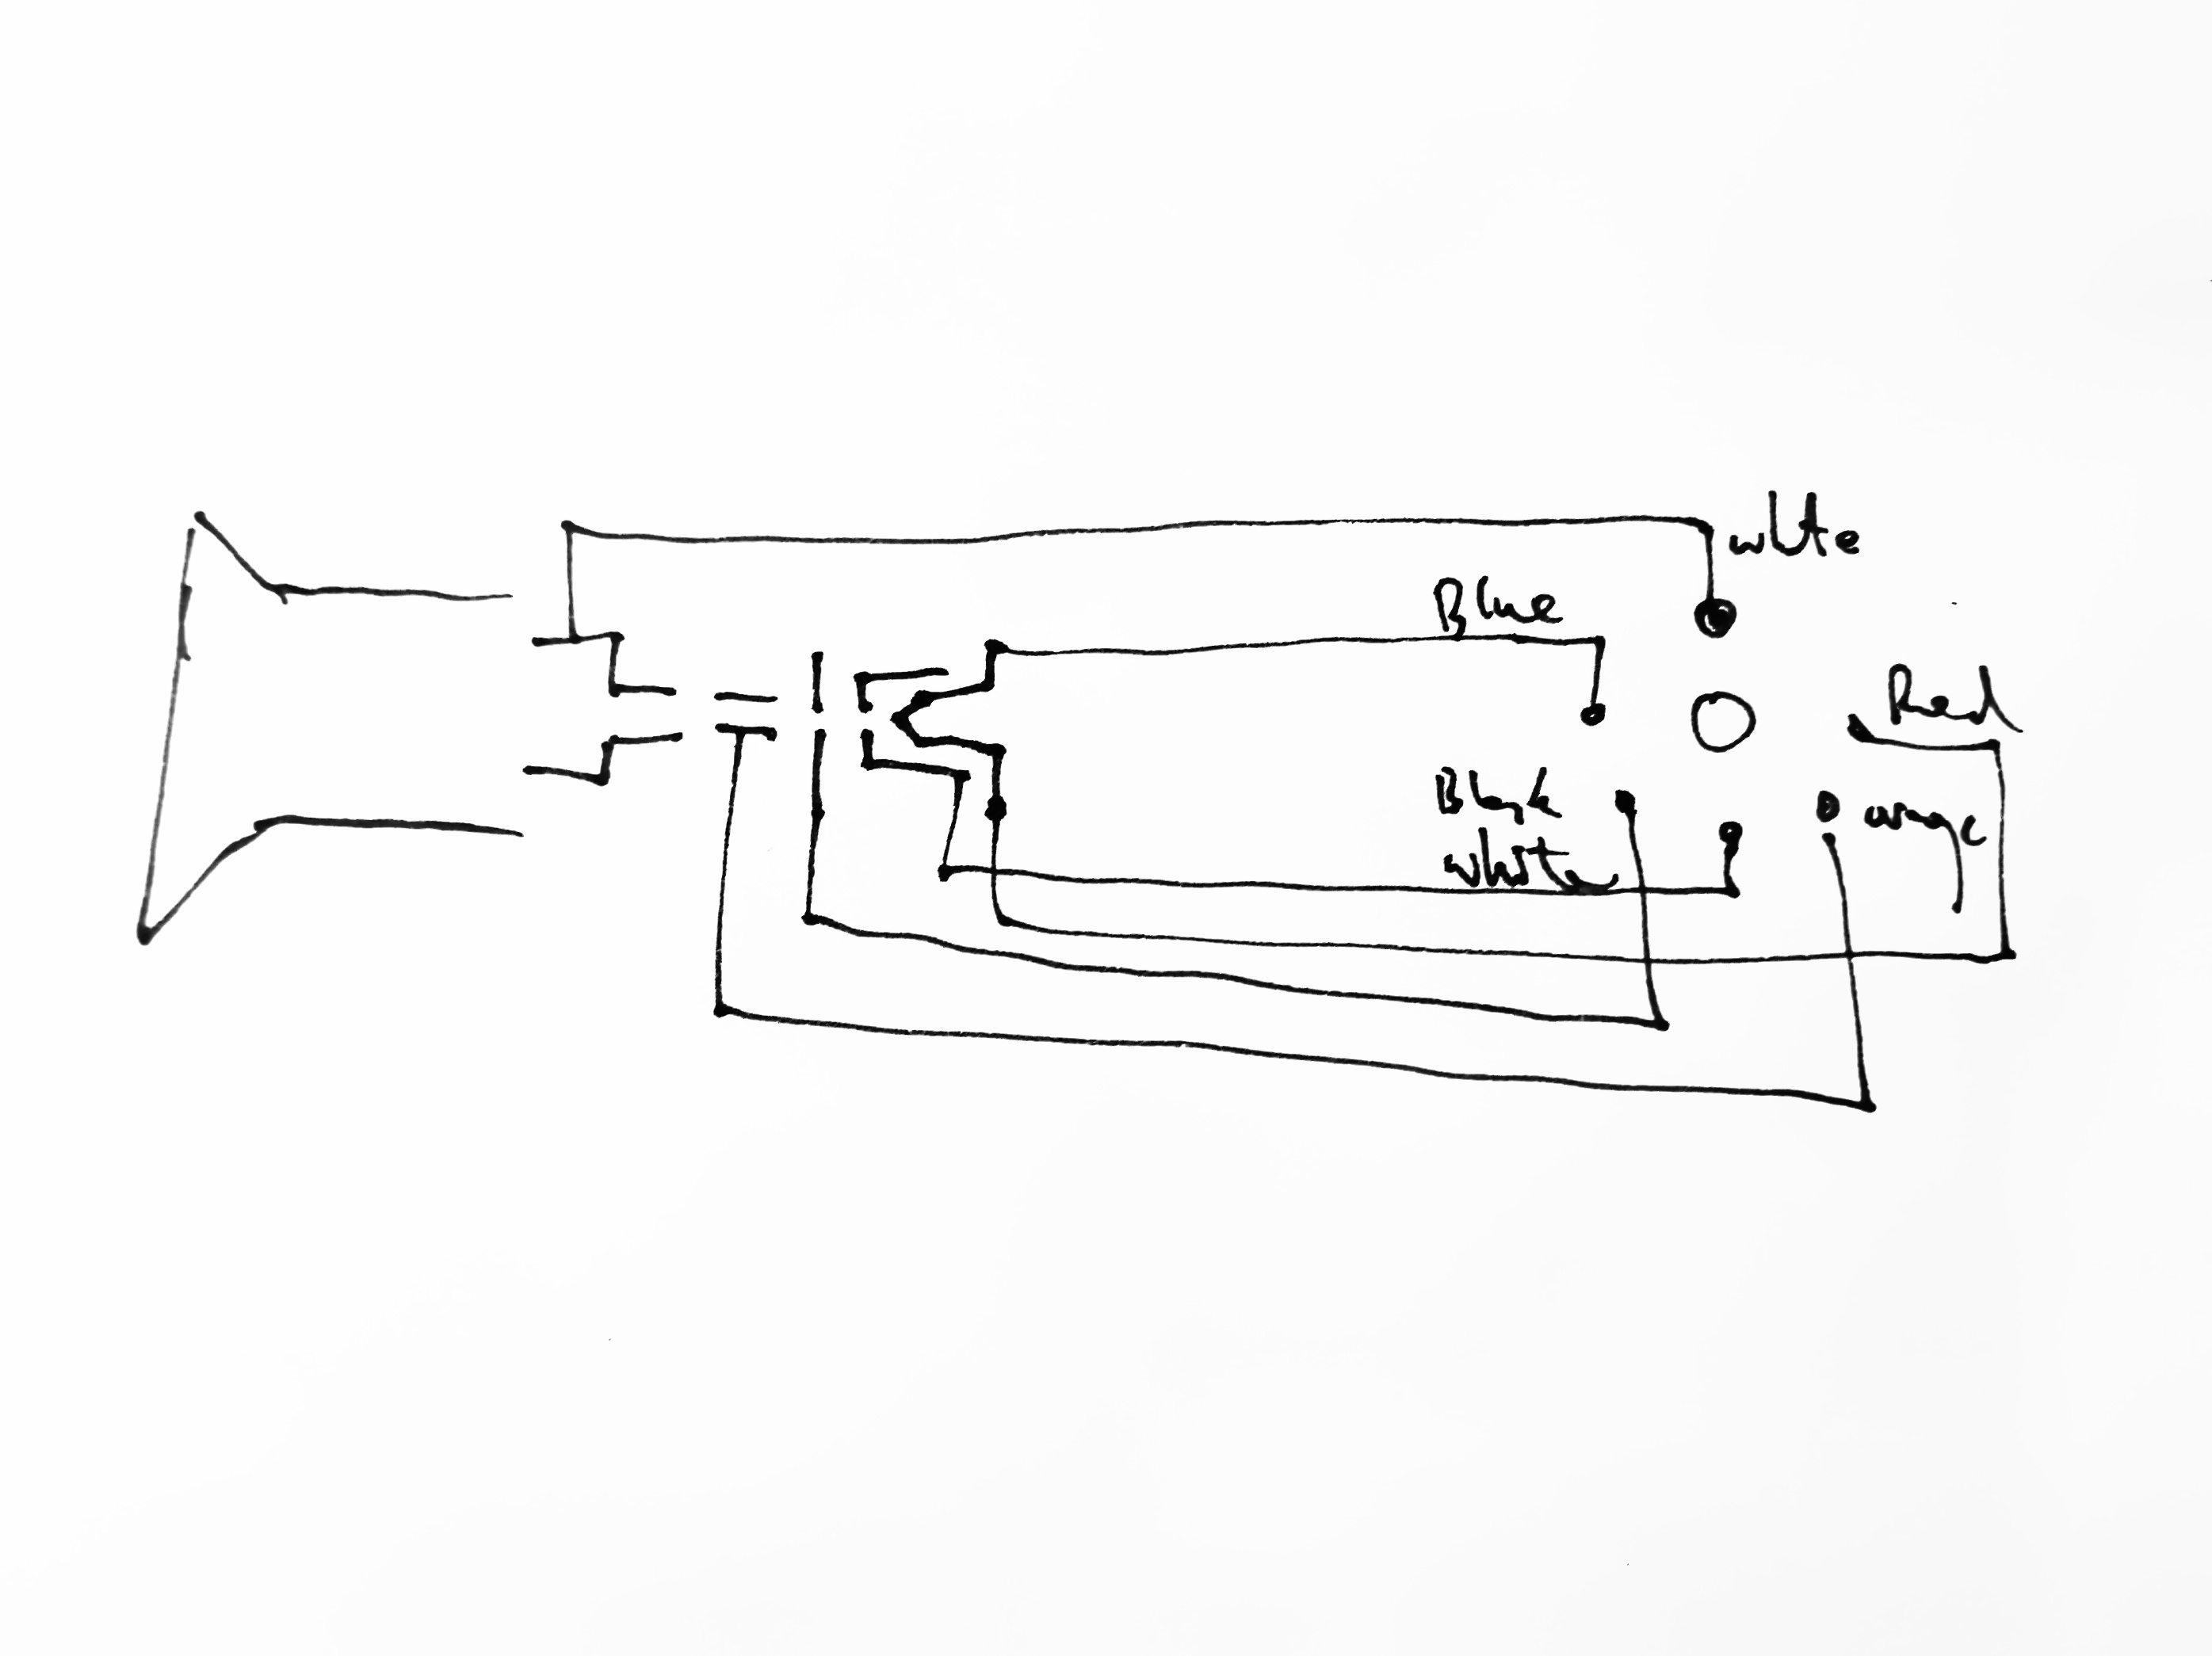 Tube schematic